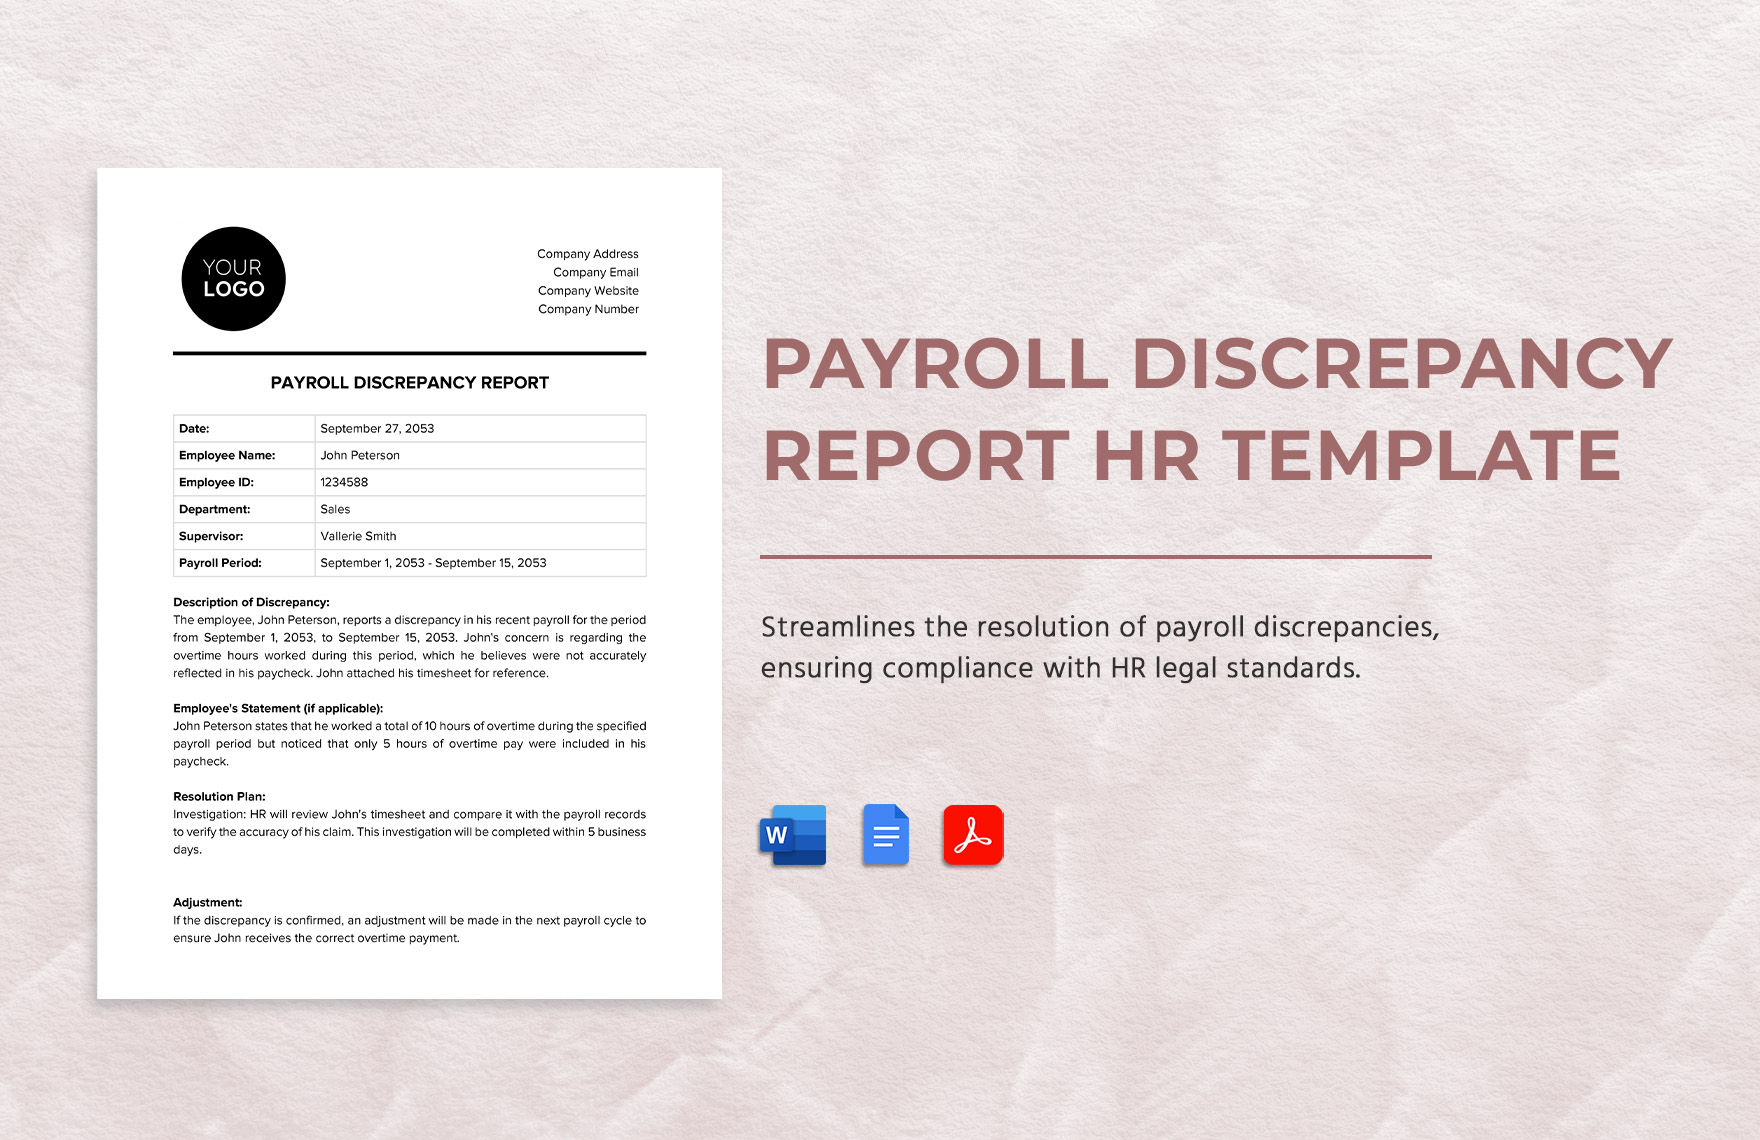 Payroll Discrepancy Report HR Template